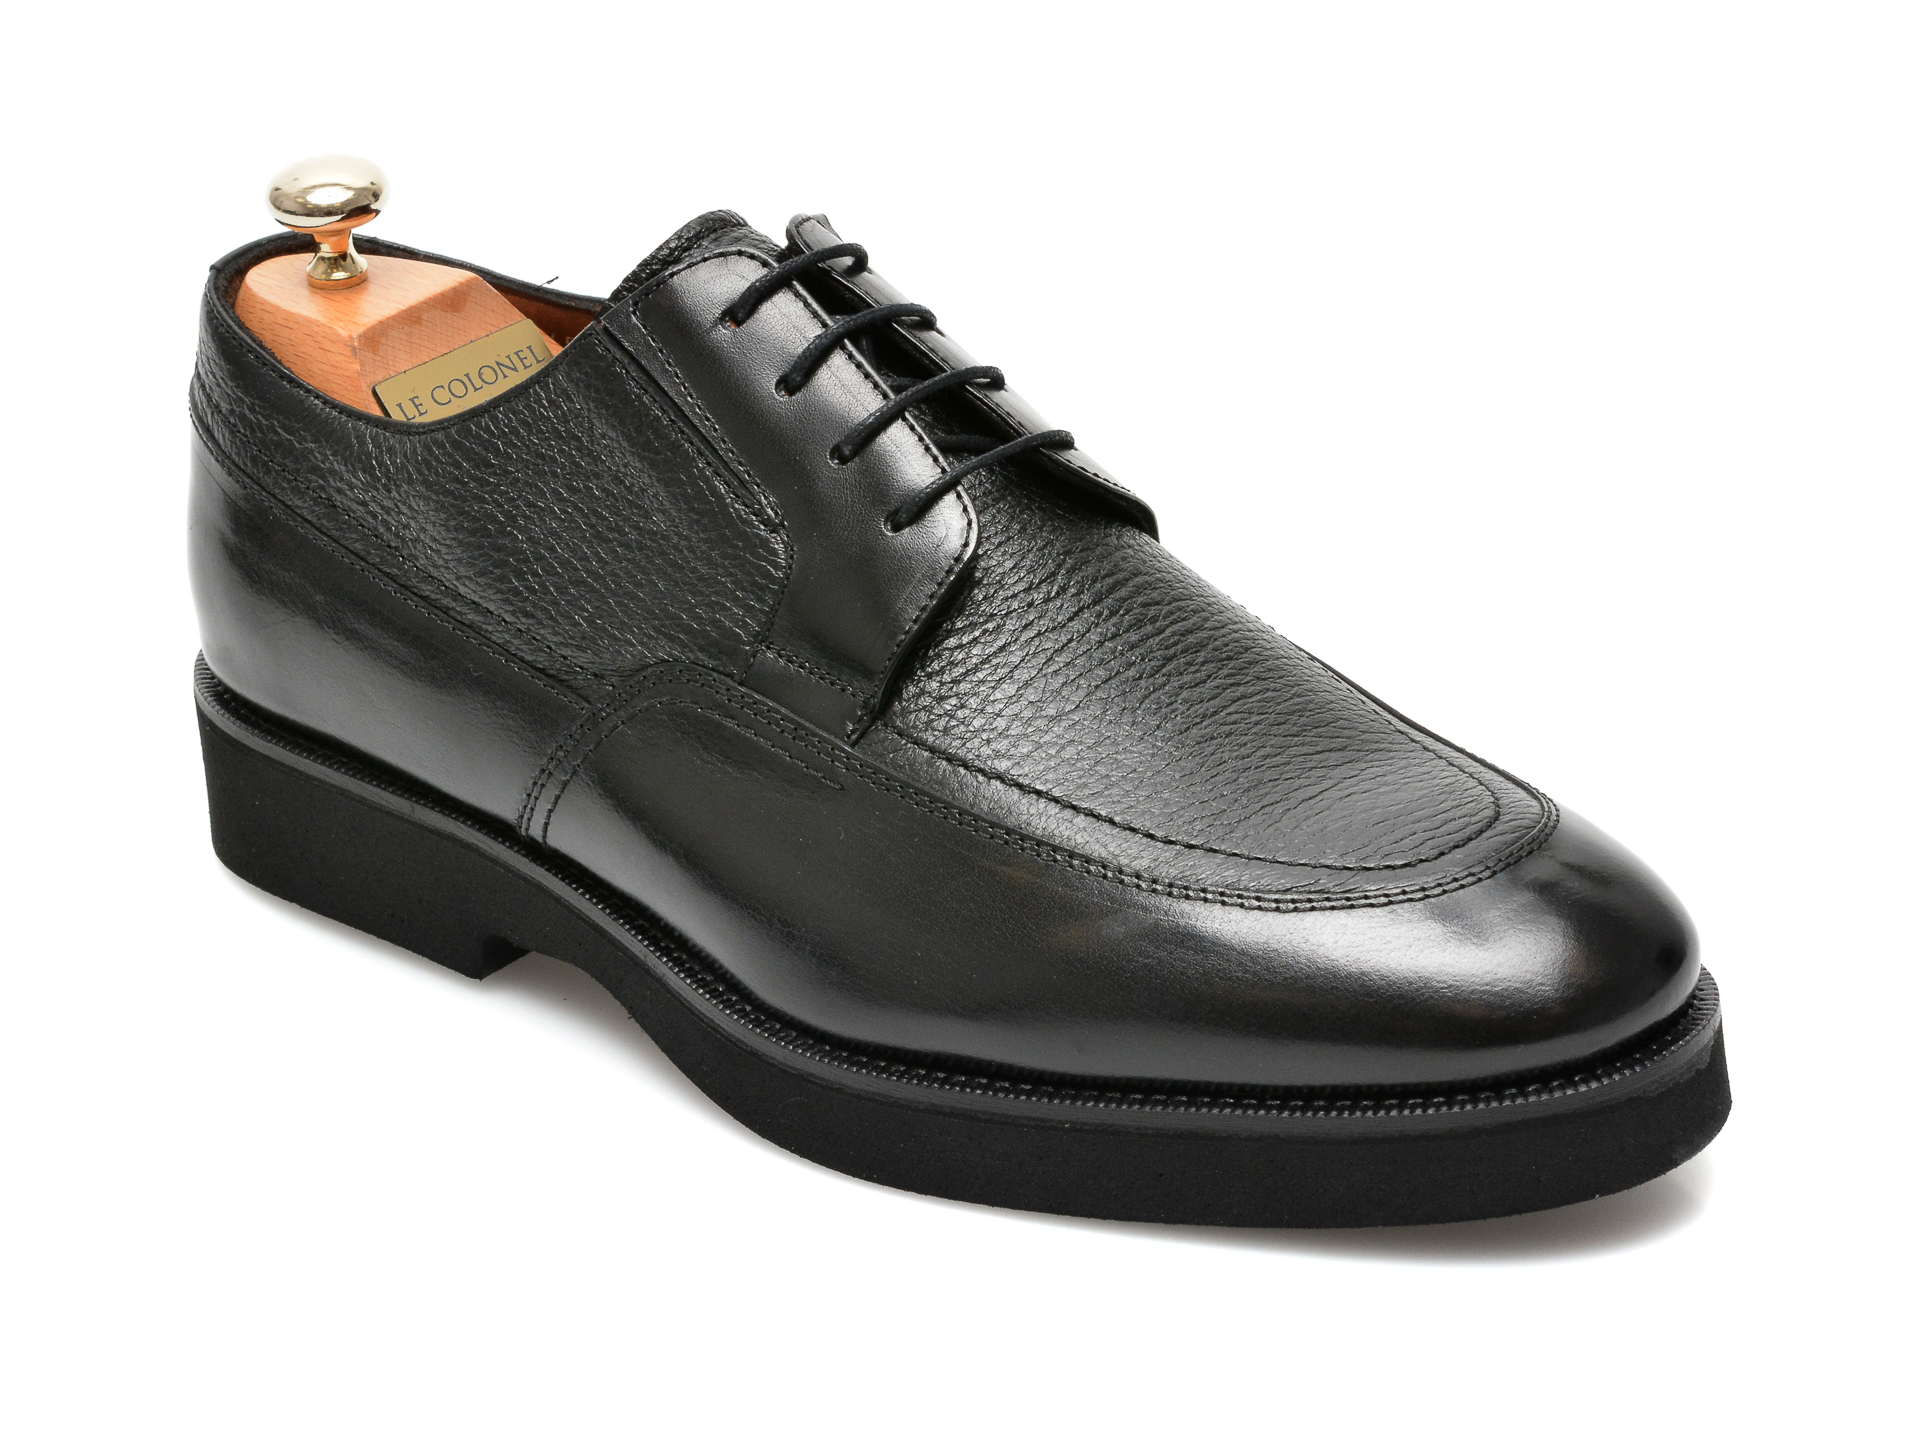 Pantofi LE COLONEL negri, 43452, din piele naturala Le Colonel imagine 2022 13clothing.ro